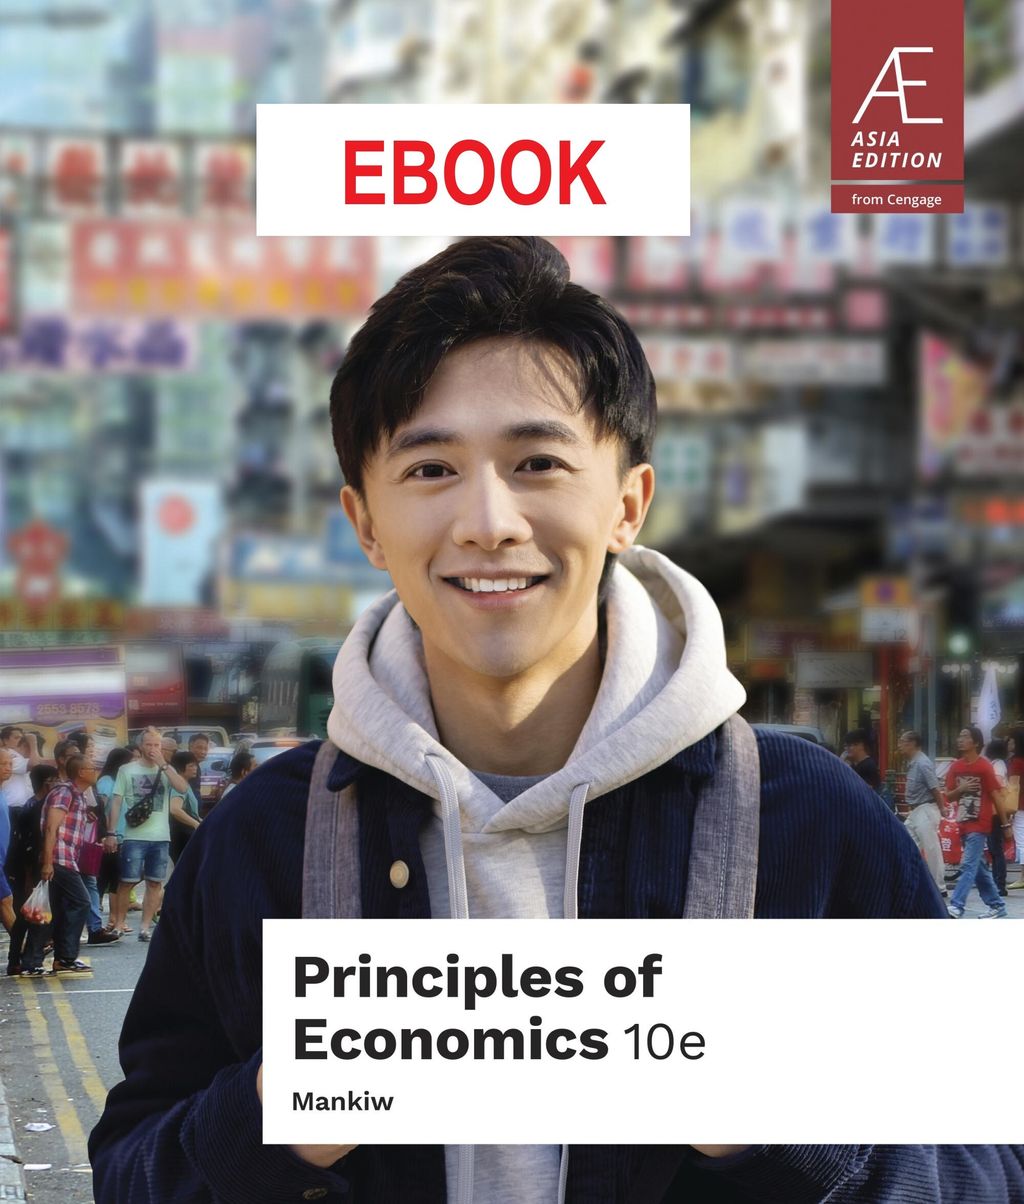 Principles of Economics Mankiw 10th AE EBOOK